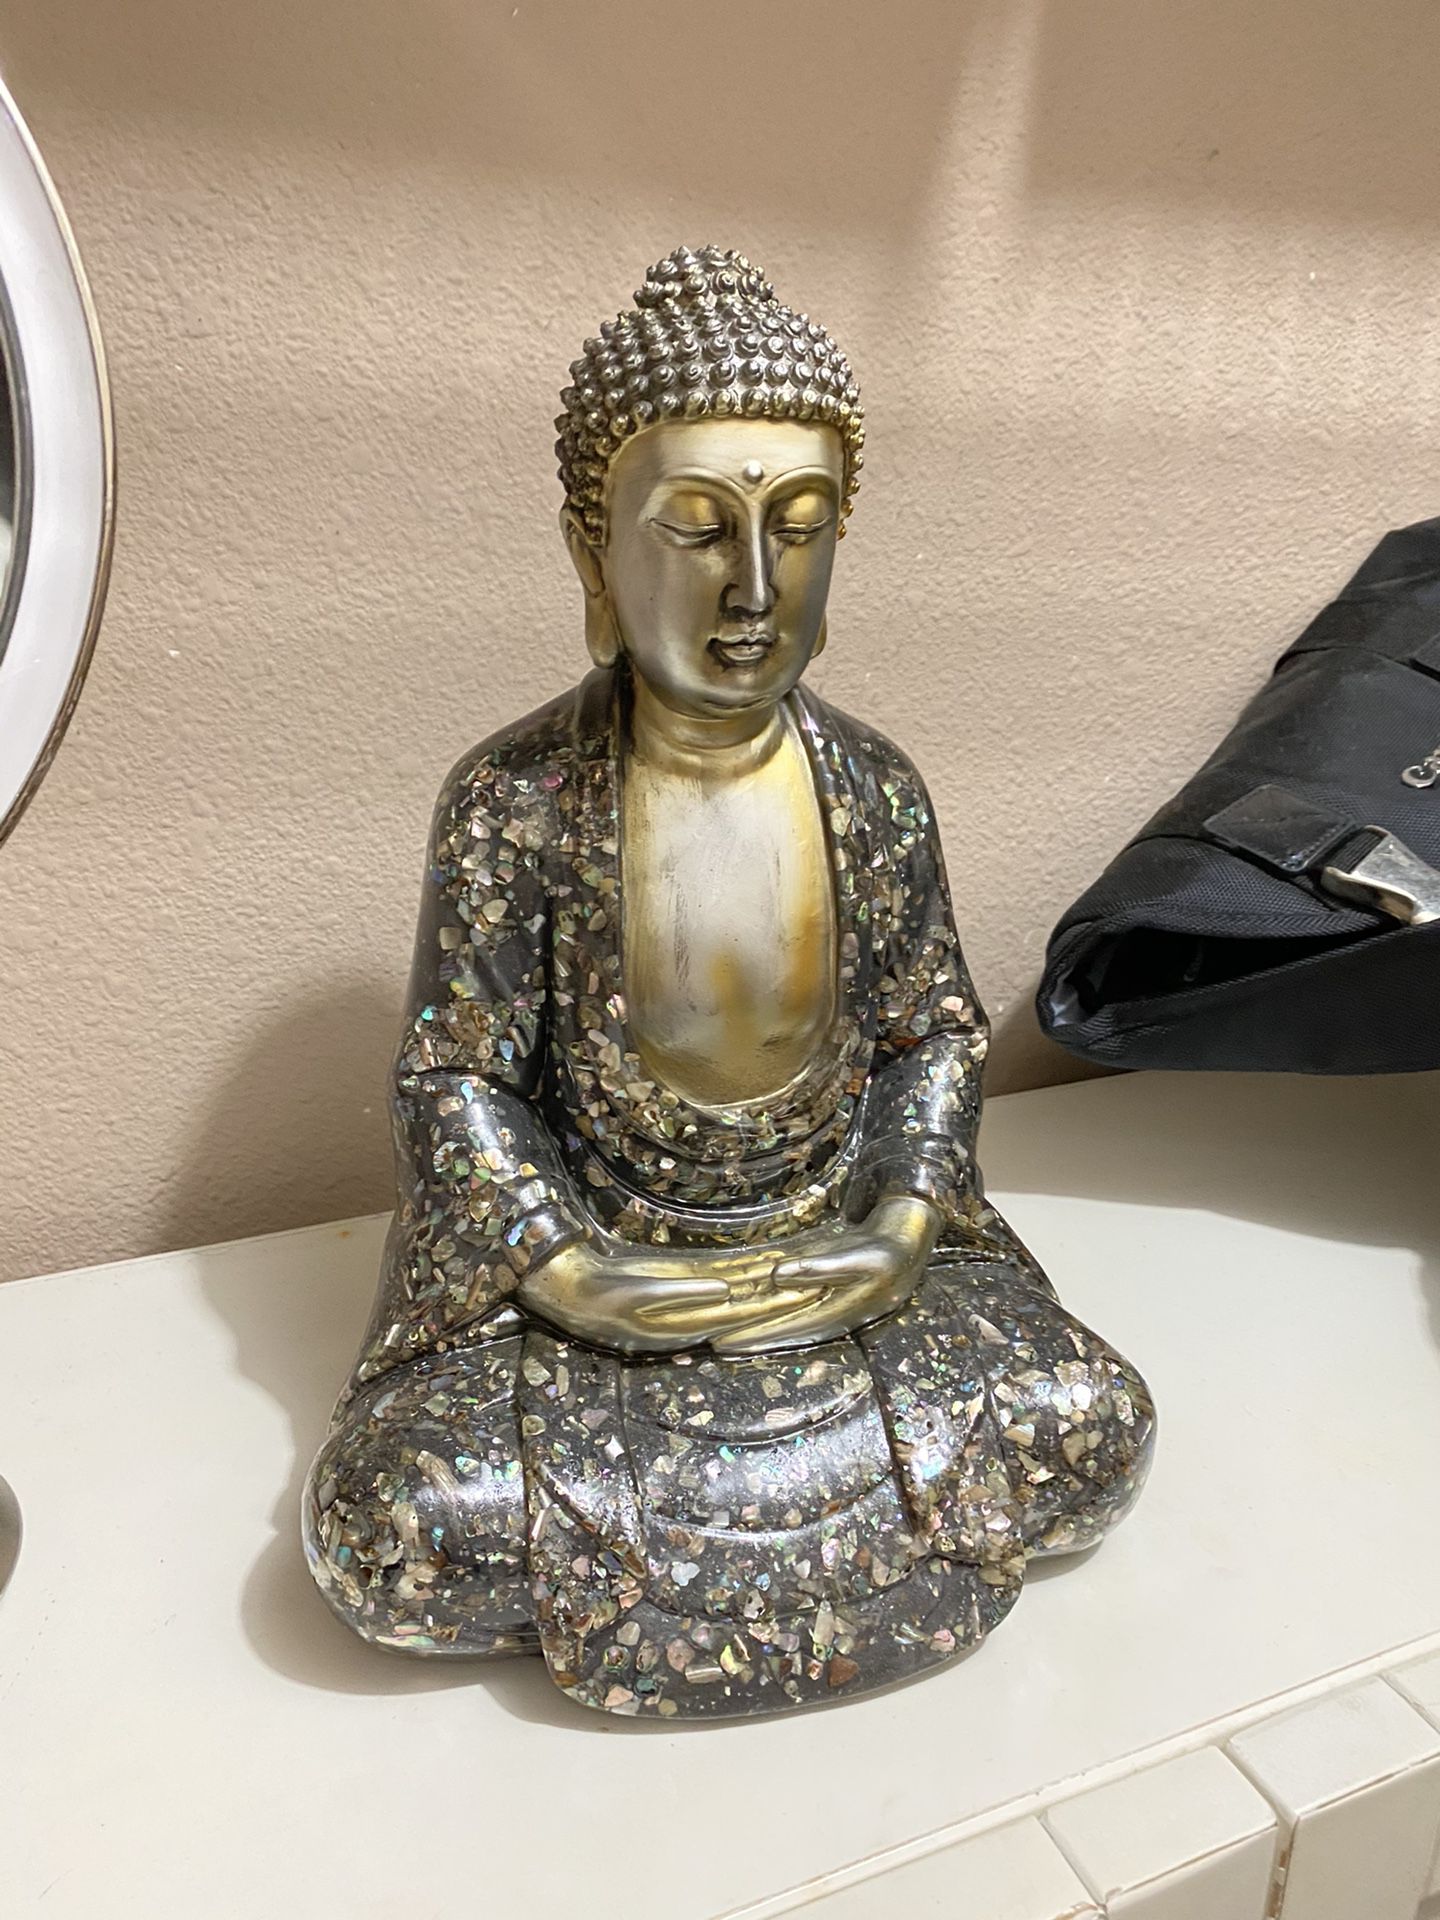 Mini Buddha sculpture